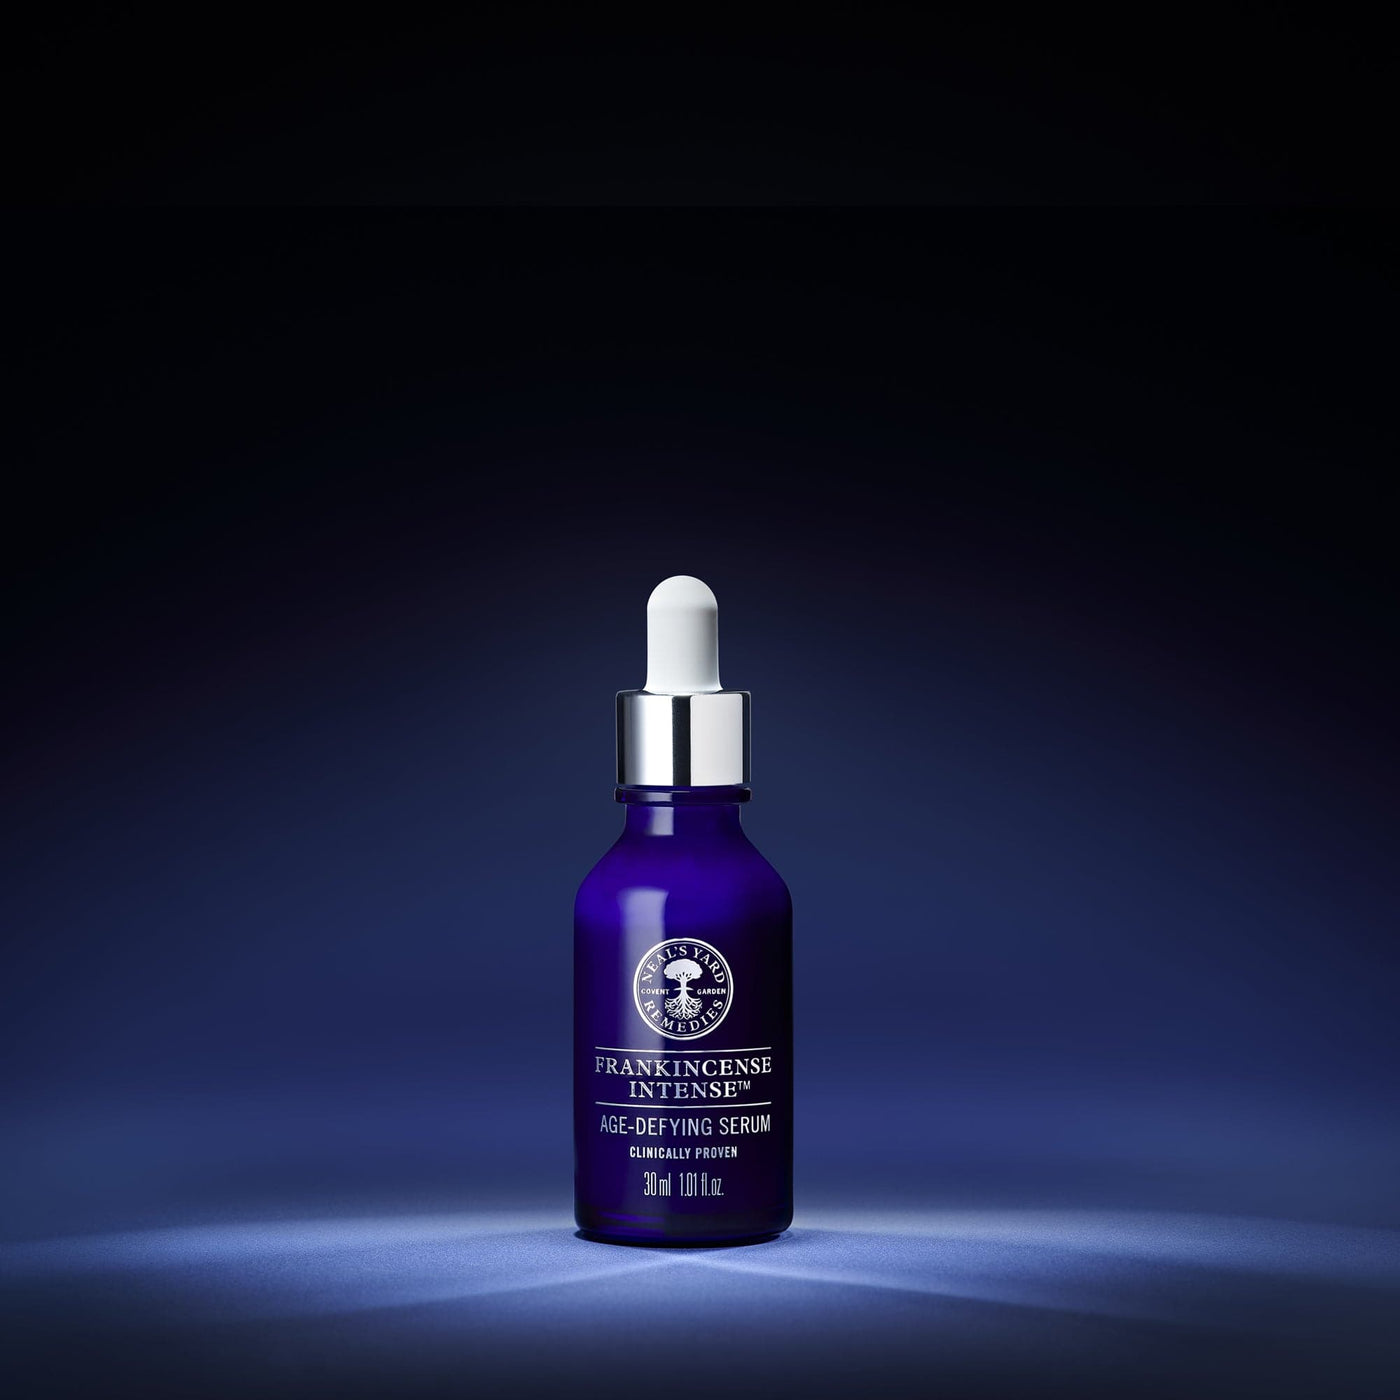 Neal's Yard Remedies Skincare Frankincense Intense™ Age-Defying Serum 1.01 fl. oz